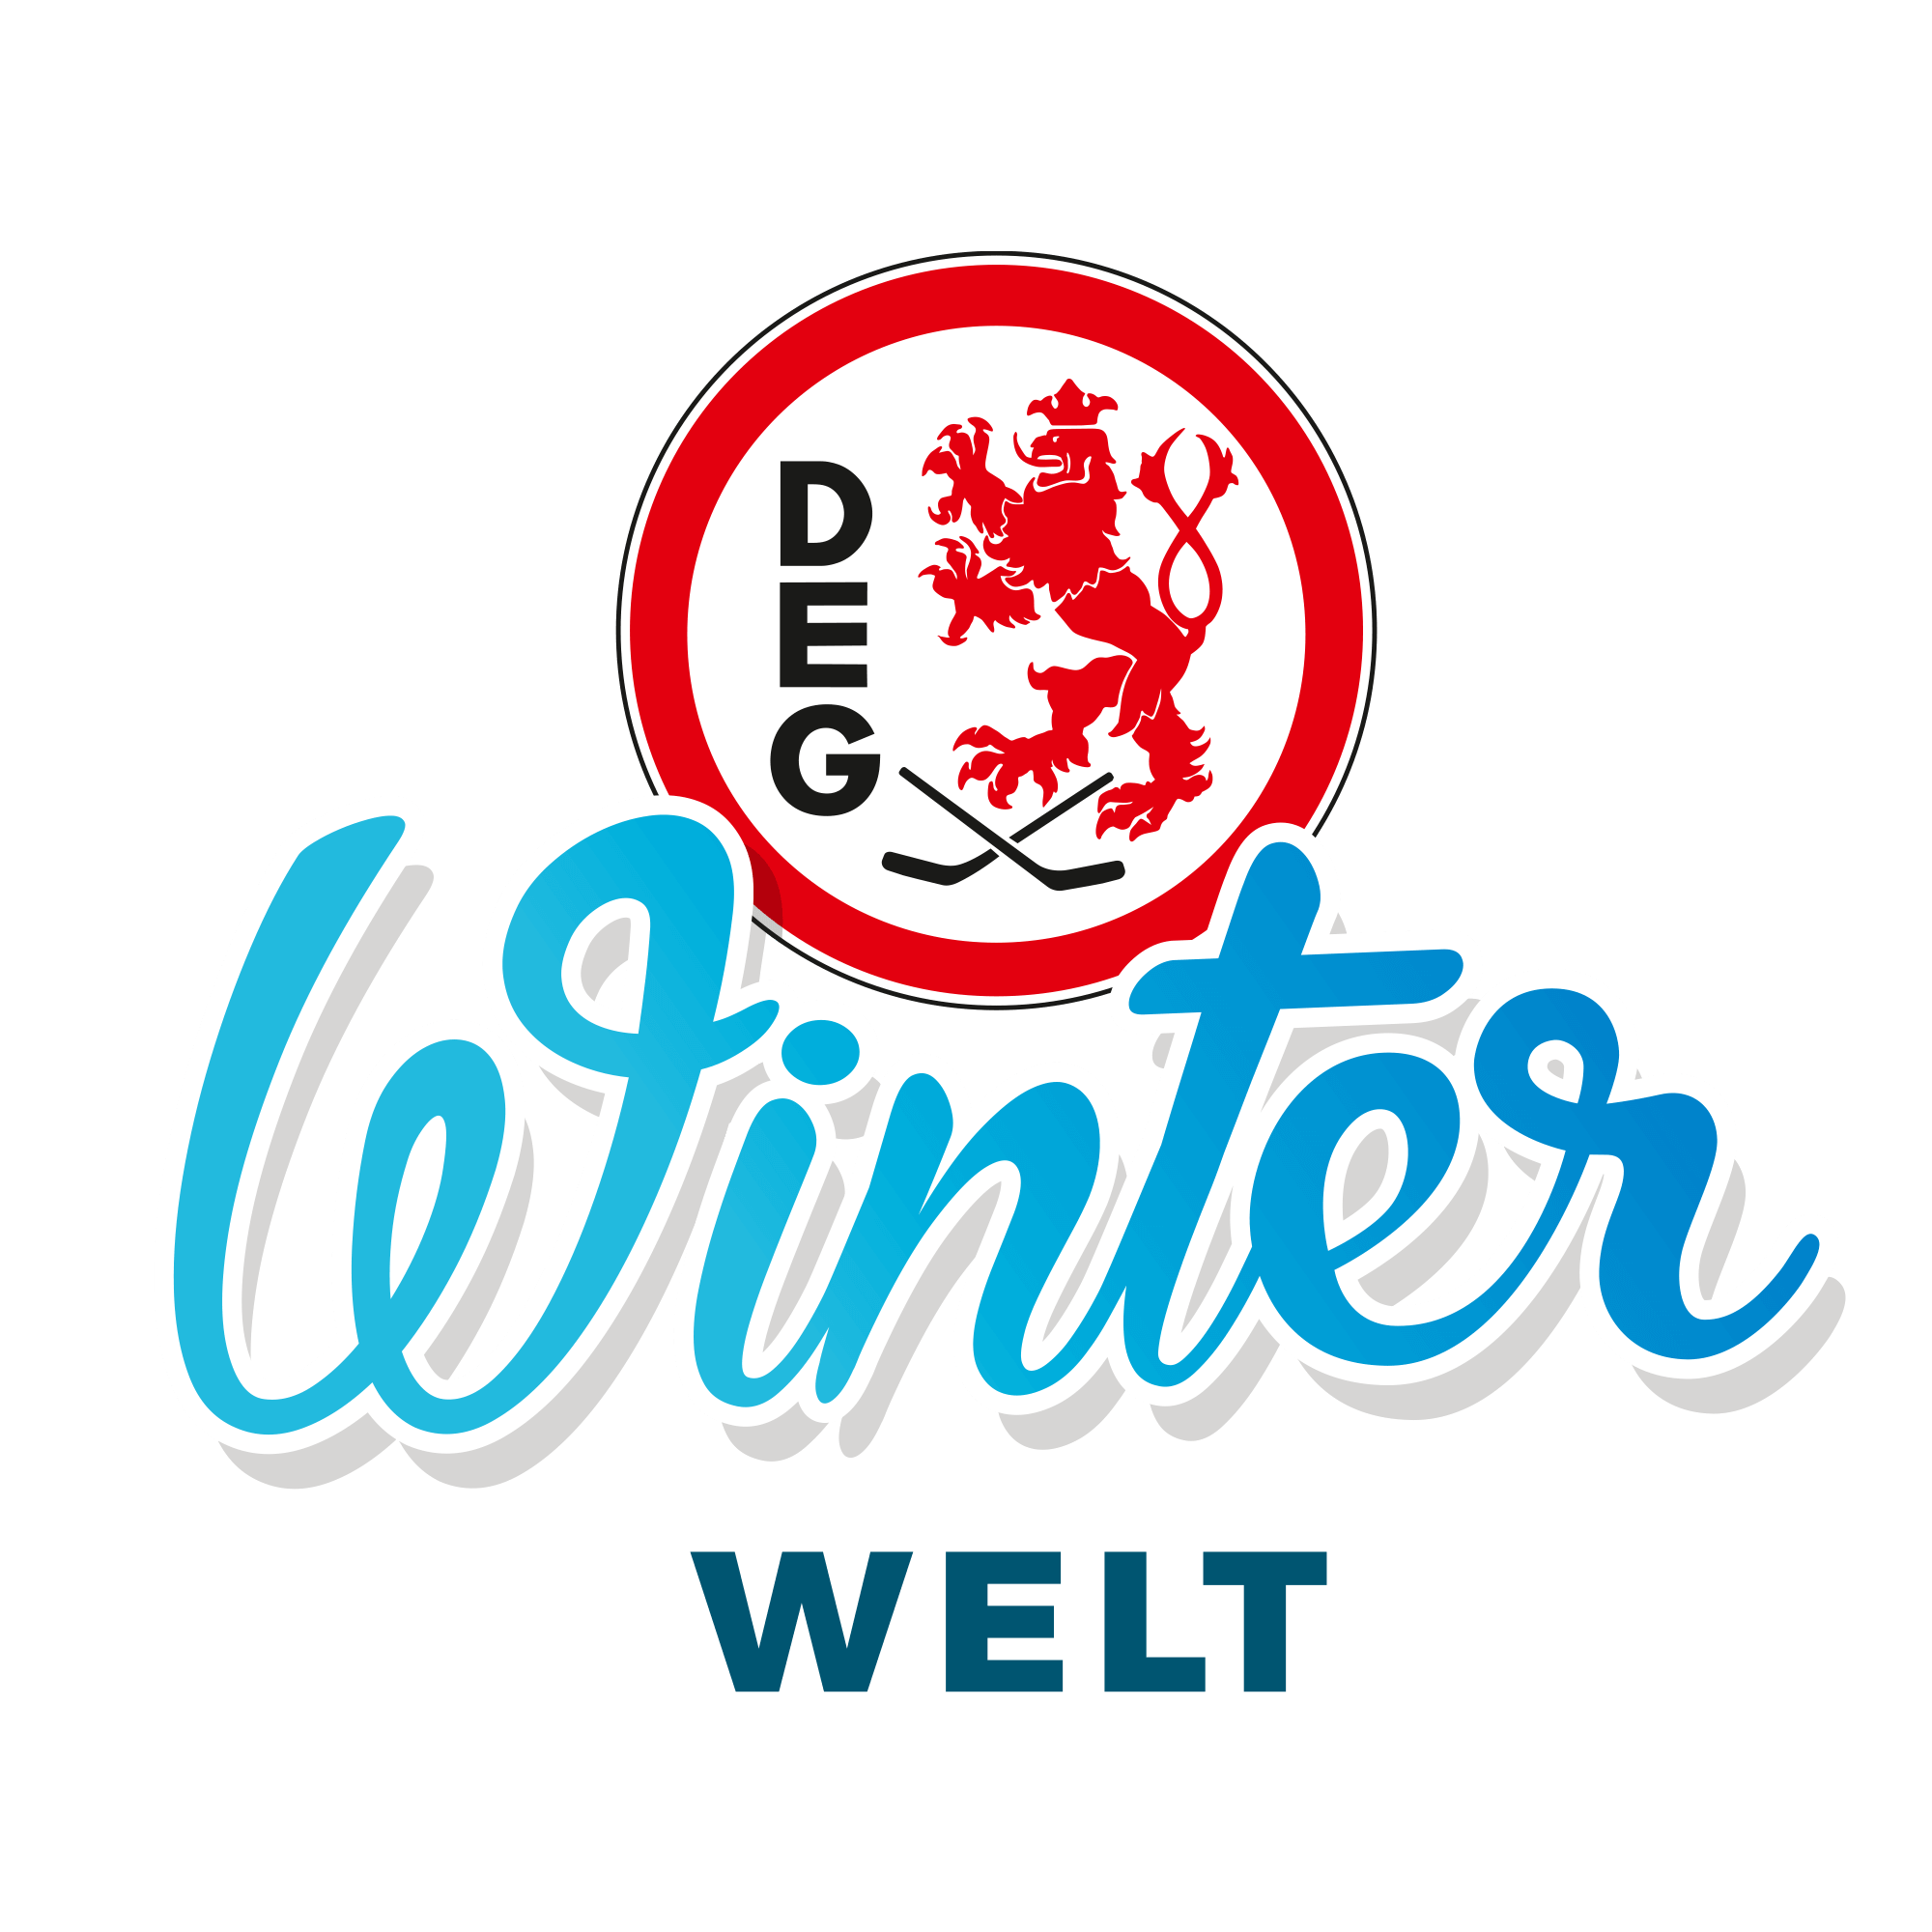 DEG-Winterwelt-logo